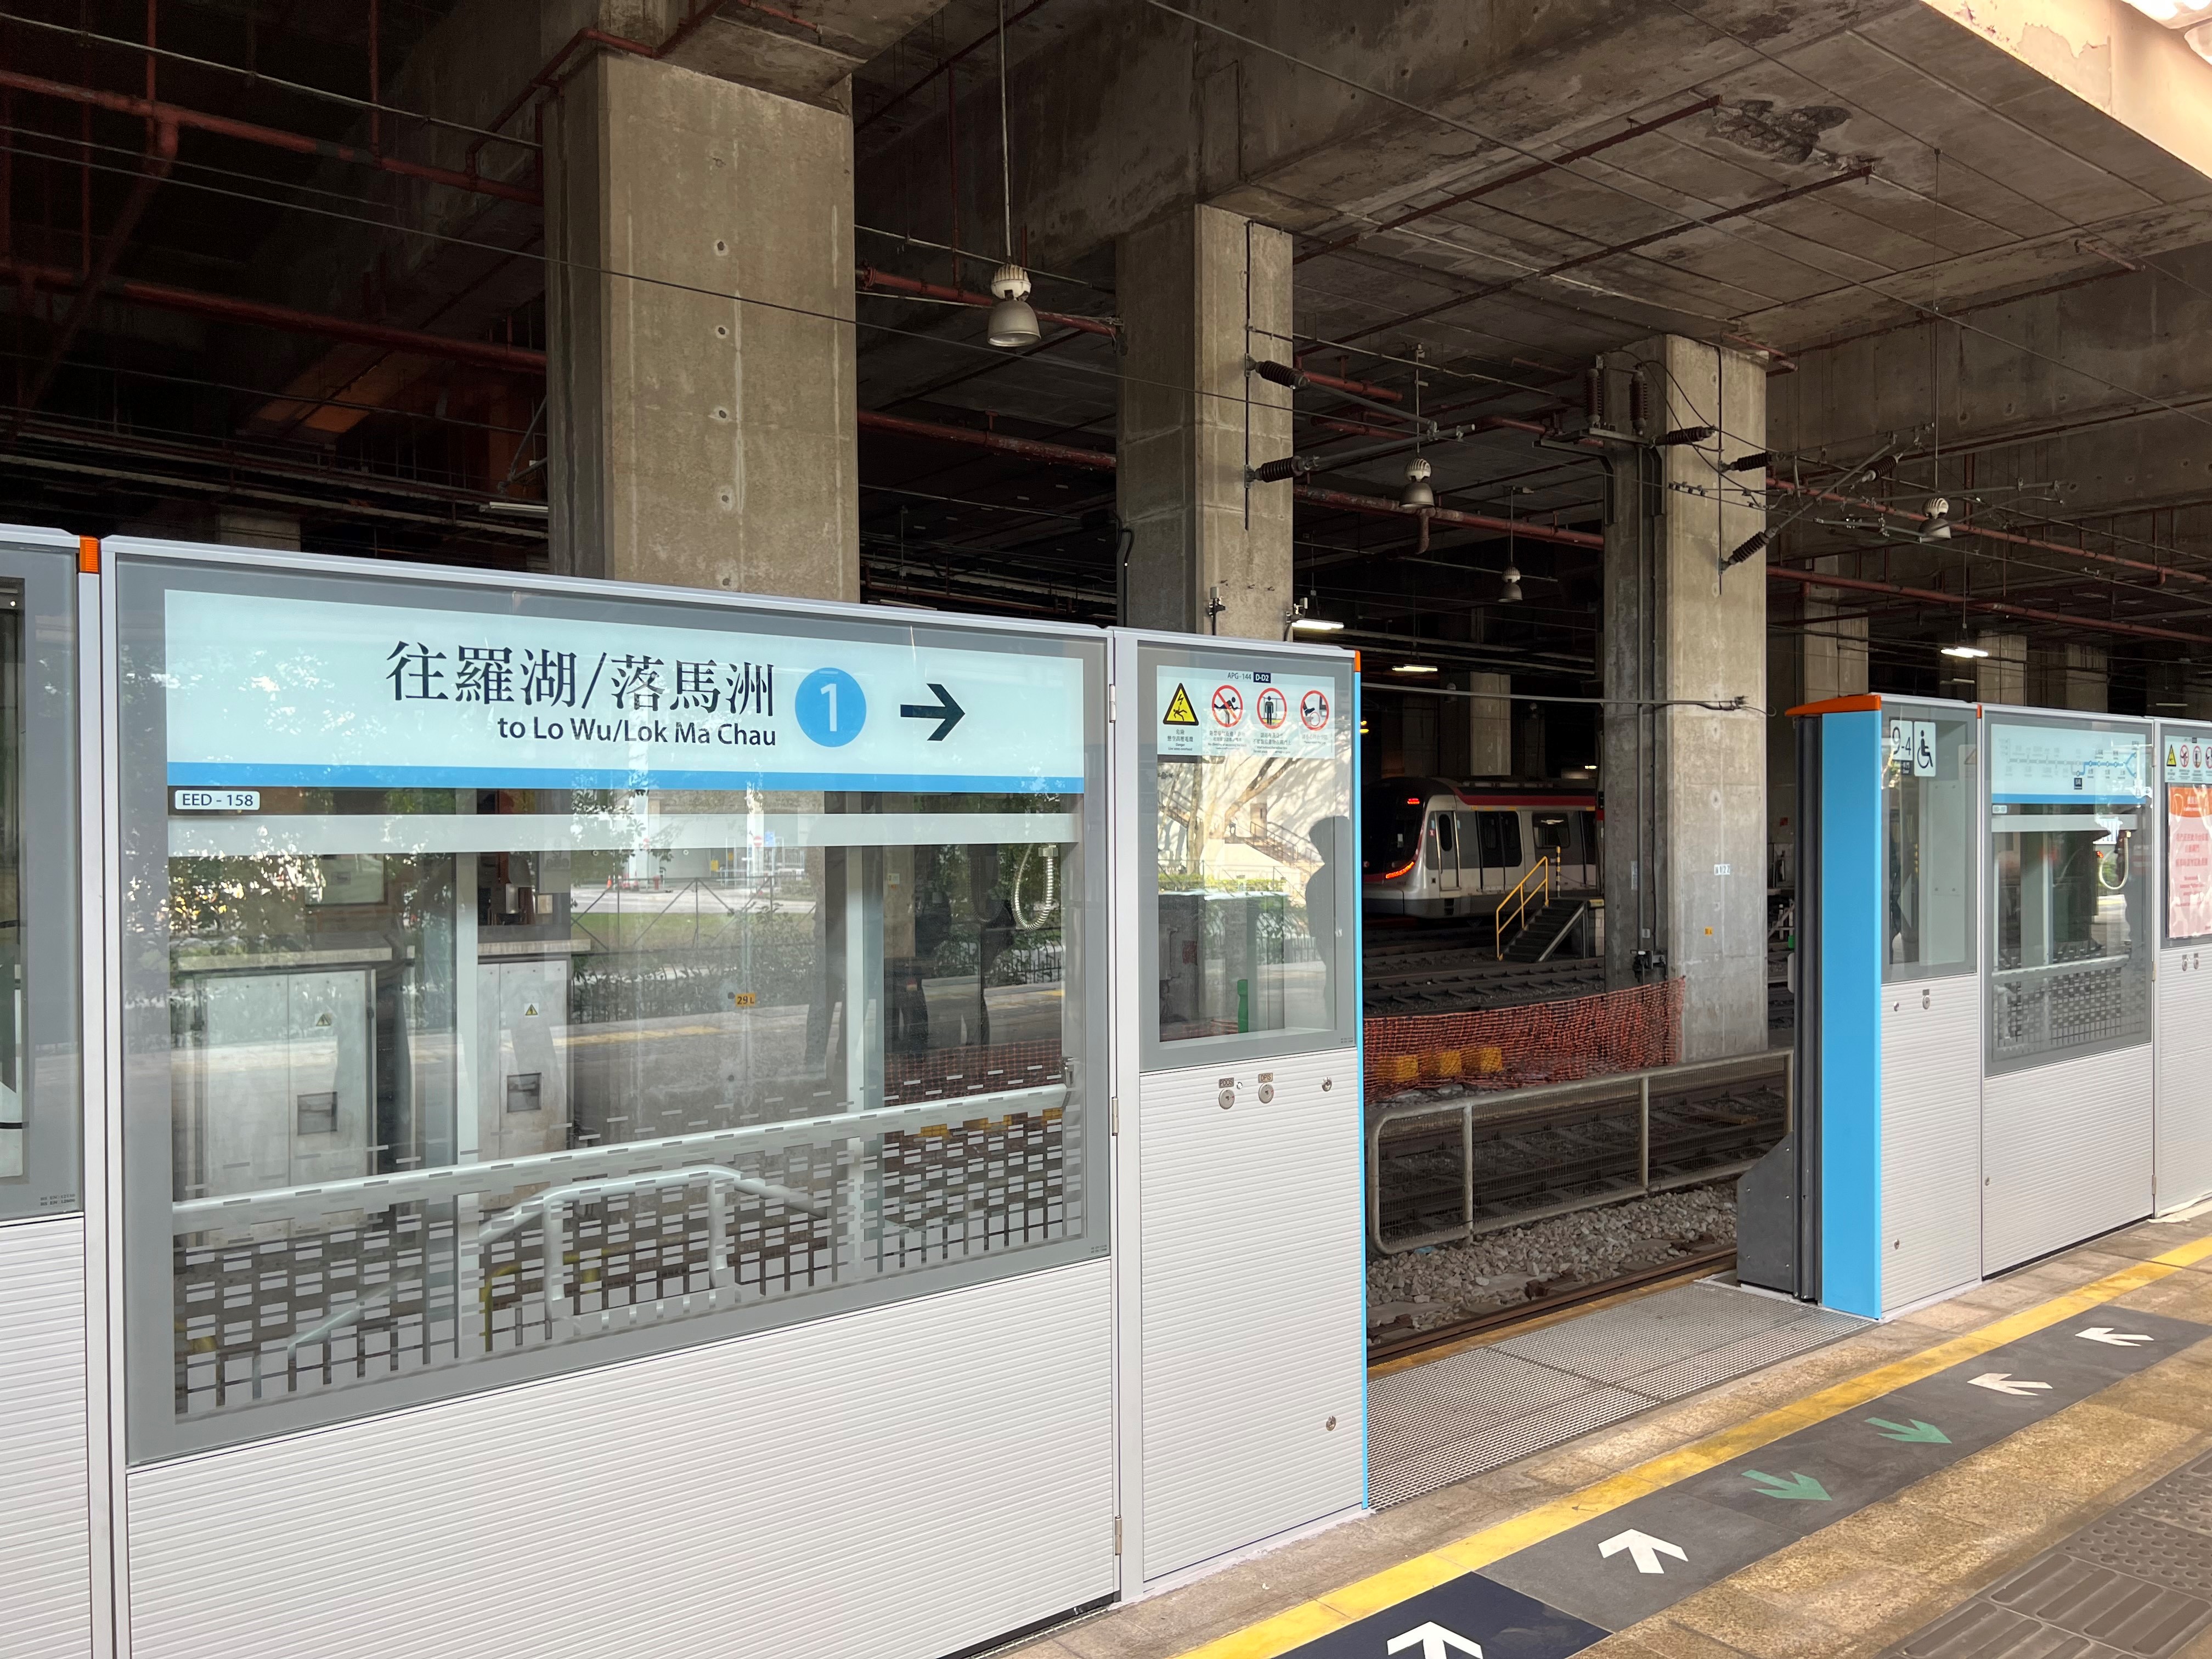 Automatic Platform Gates Installation on East Rail Line